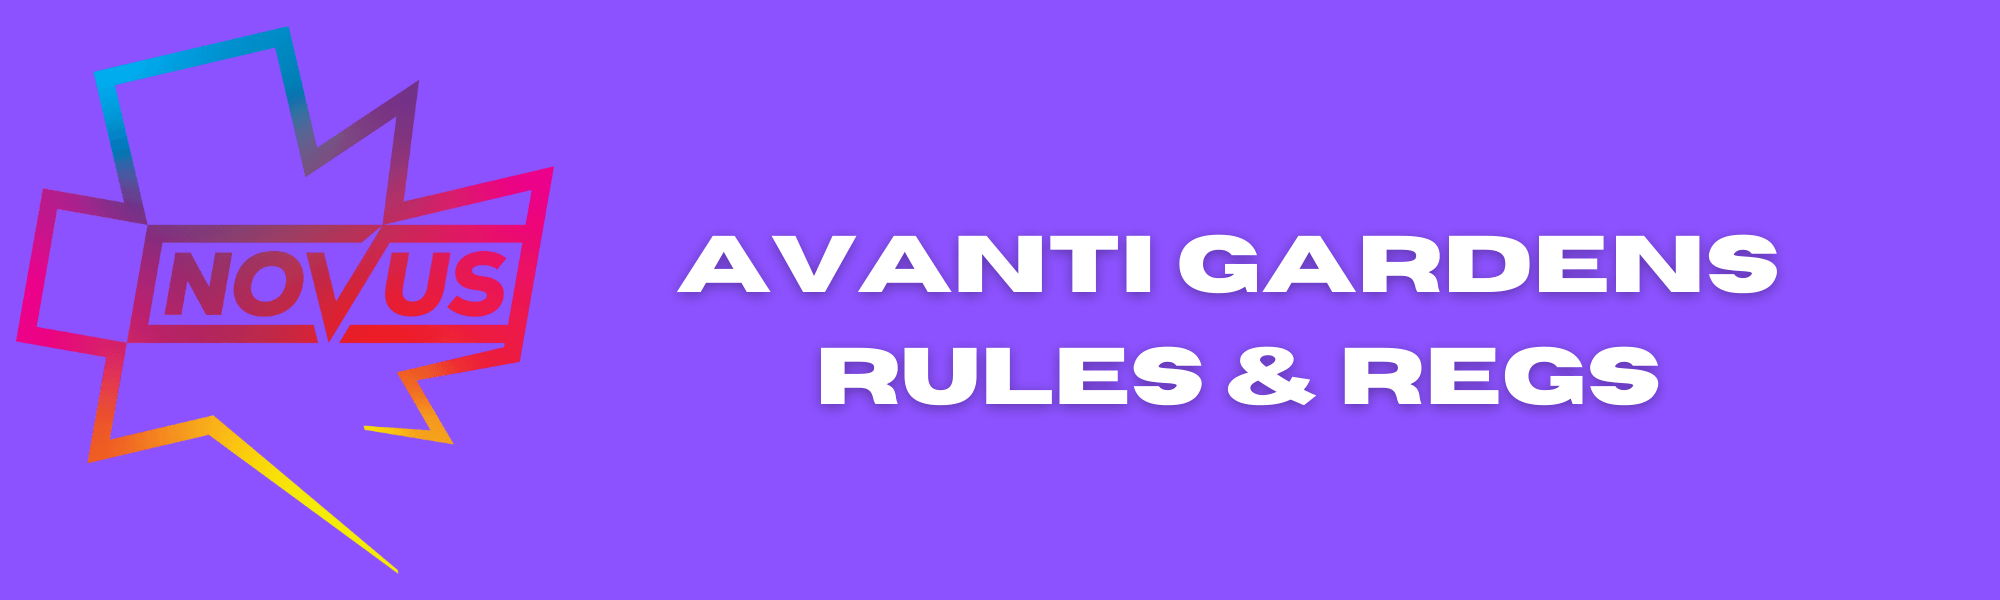 Avanti Gardens Rules and Regulations Banner